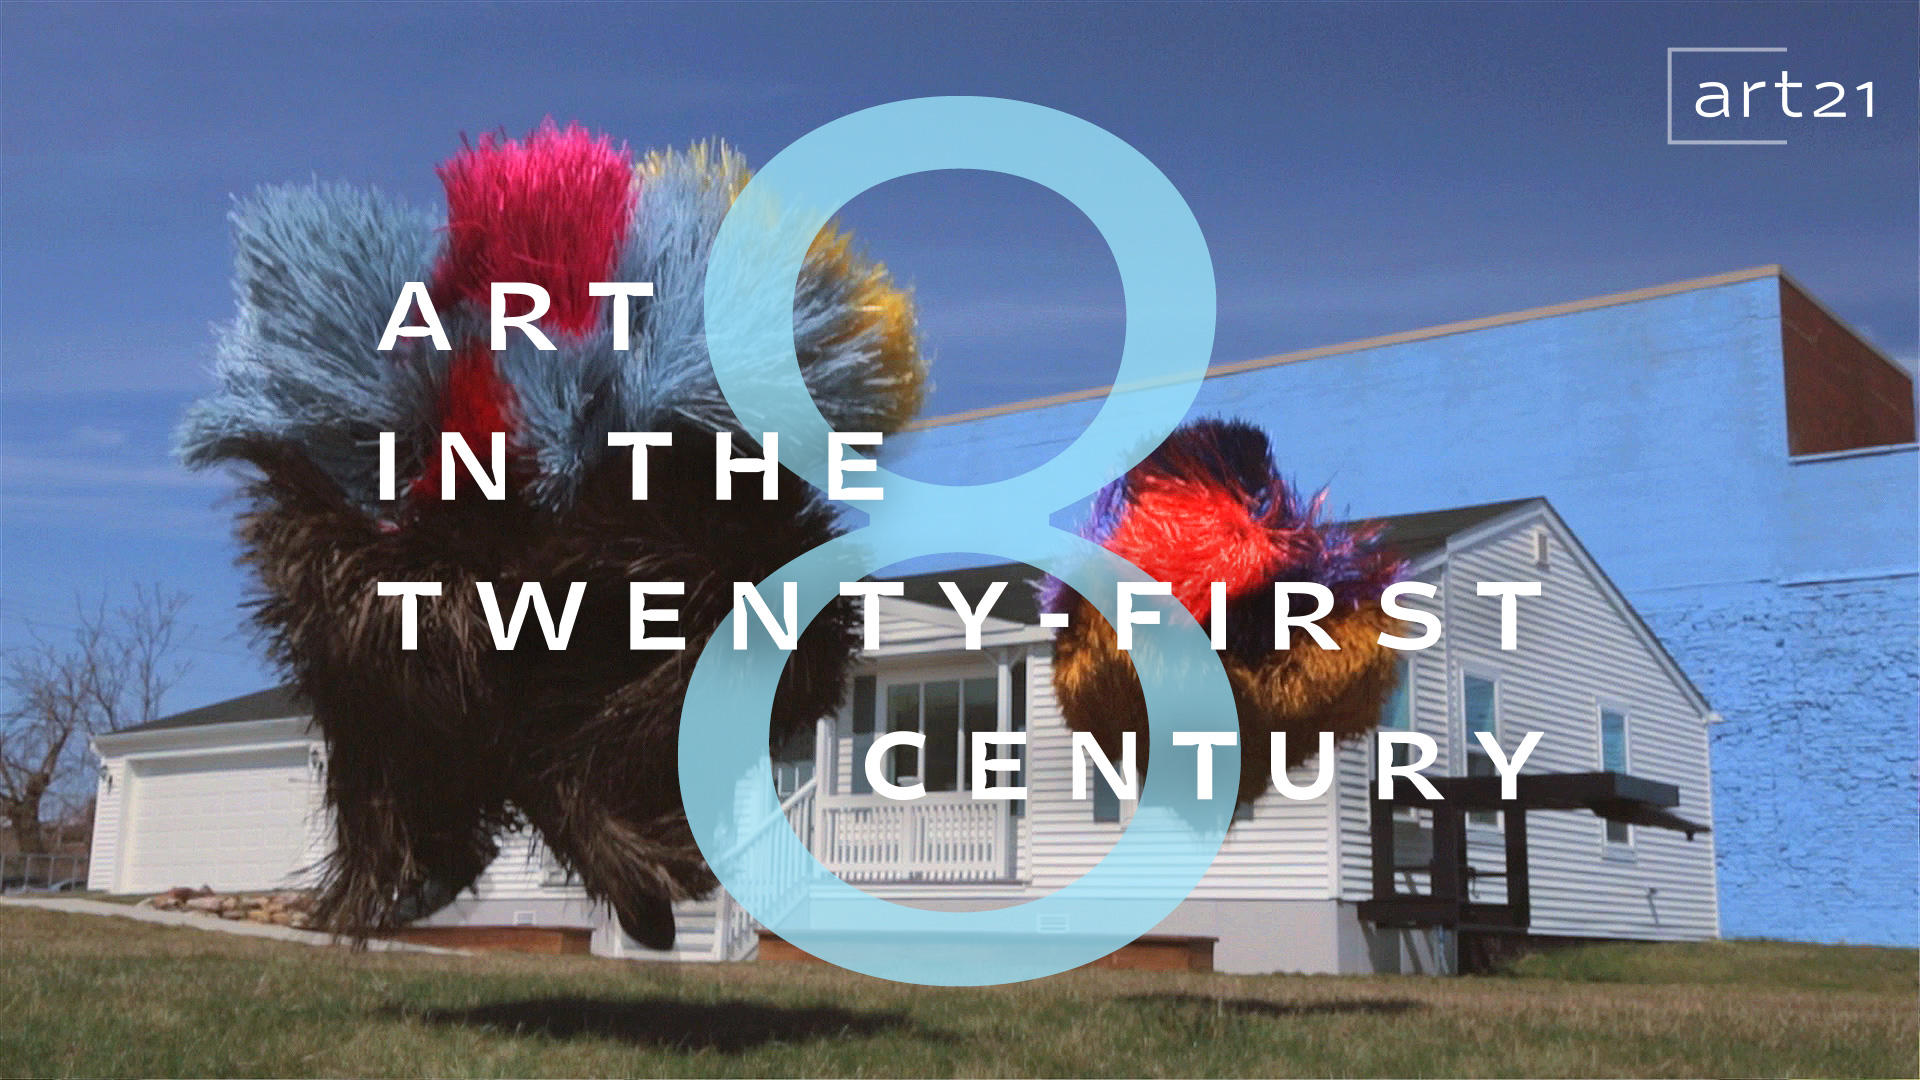 ART21 Announces New Season of “Art in the Twenty-First Century” this